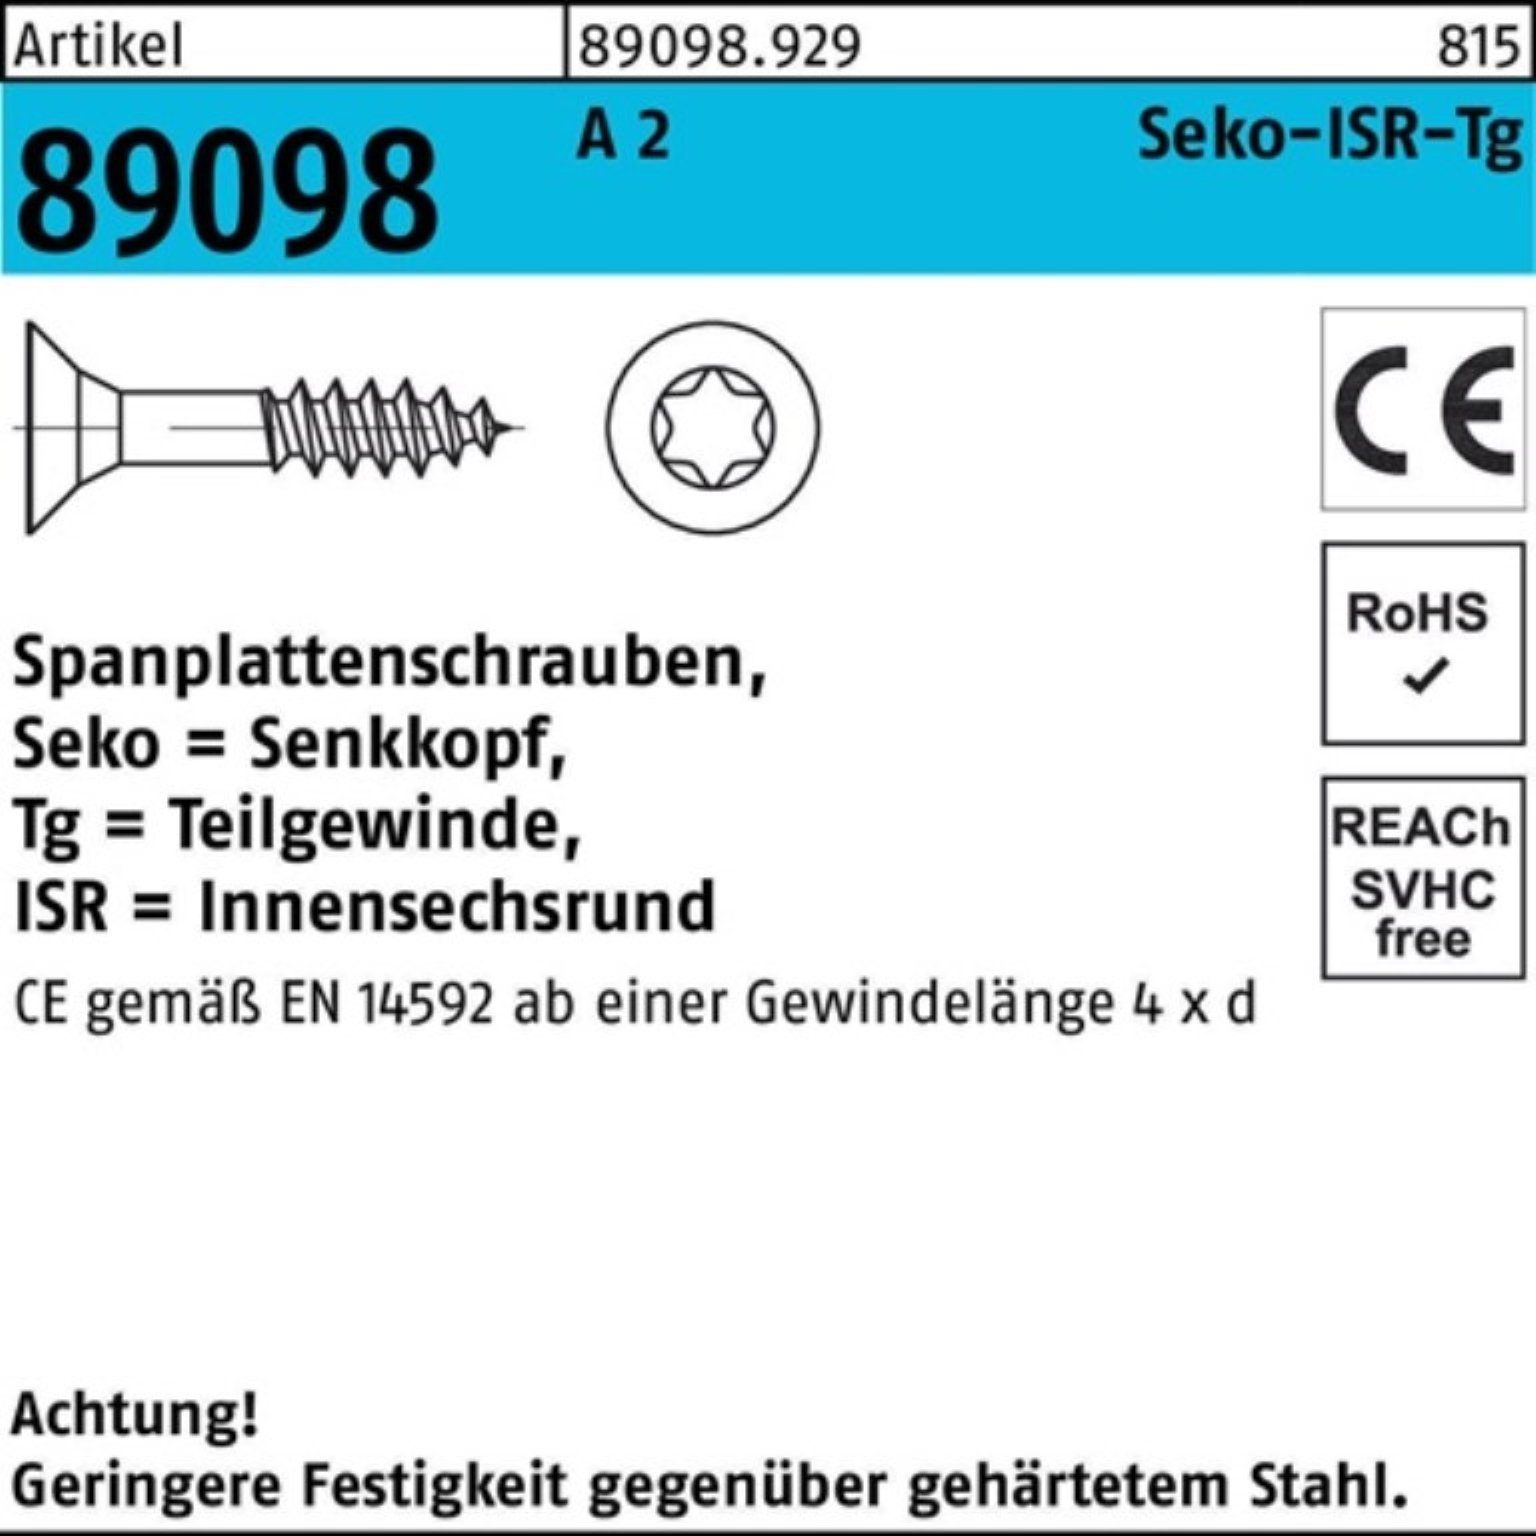 200 89098 Spanplattenschraube Pack R A 40-T10 TG ISR Spanplattenschraube SEKO Reyher 200er 2 3,5x